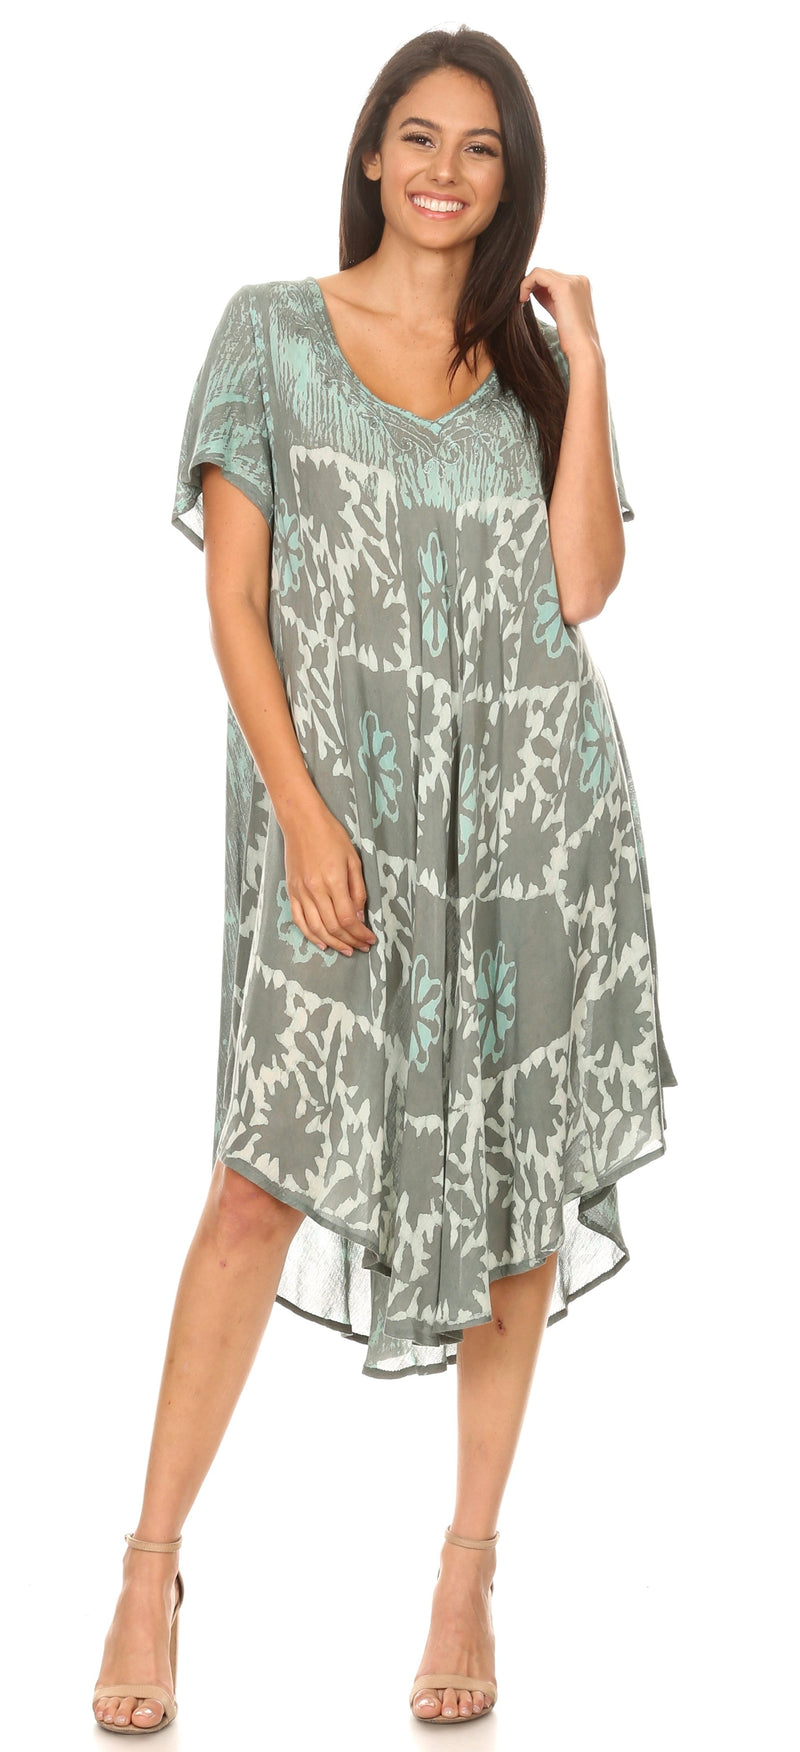 Sakkas Dalila Women's Midi A-line Short Sleeve Boho Swing Dress Cover-up Nightgown